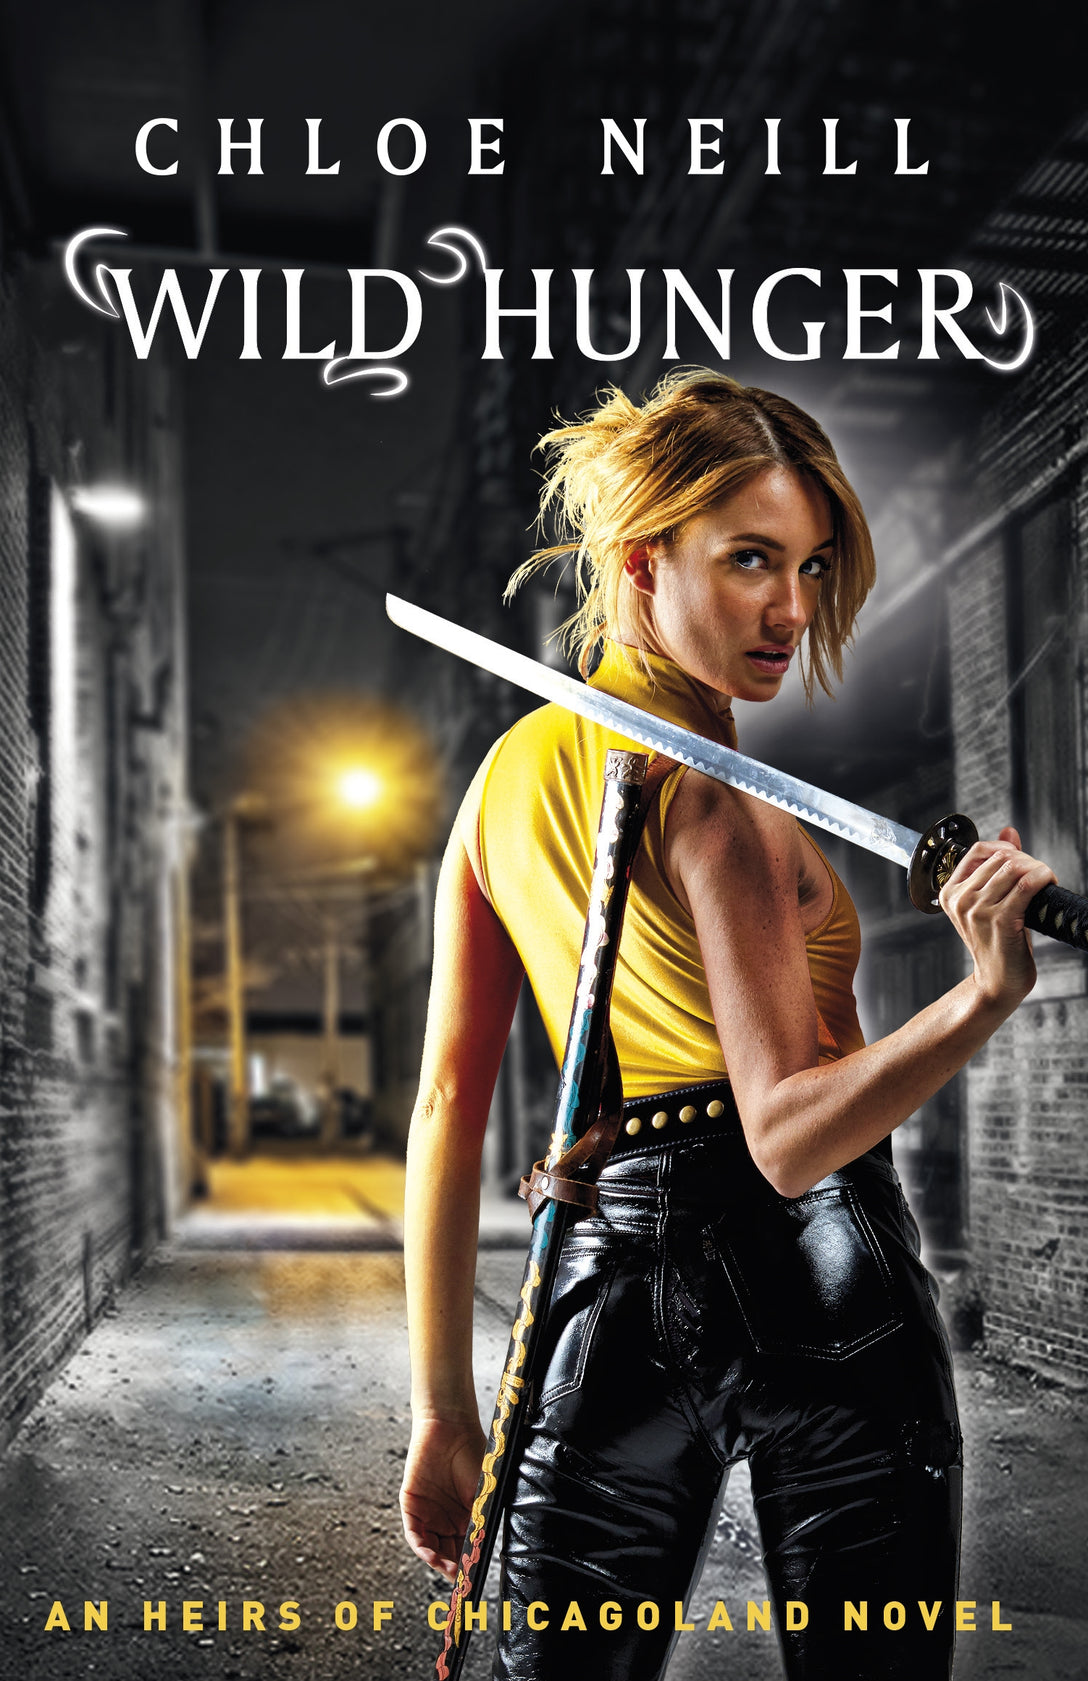 Wild Hunger by Chloe Neill